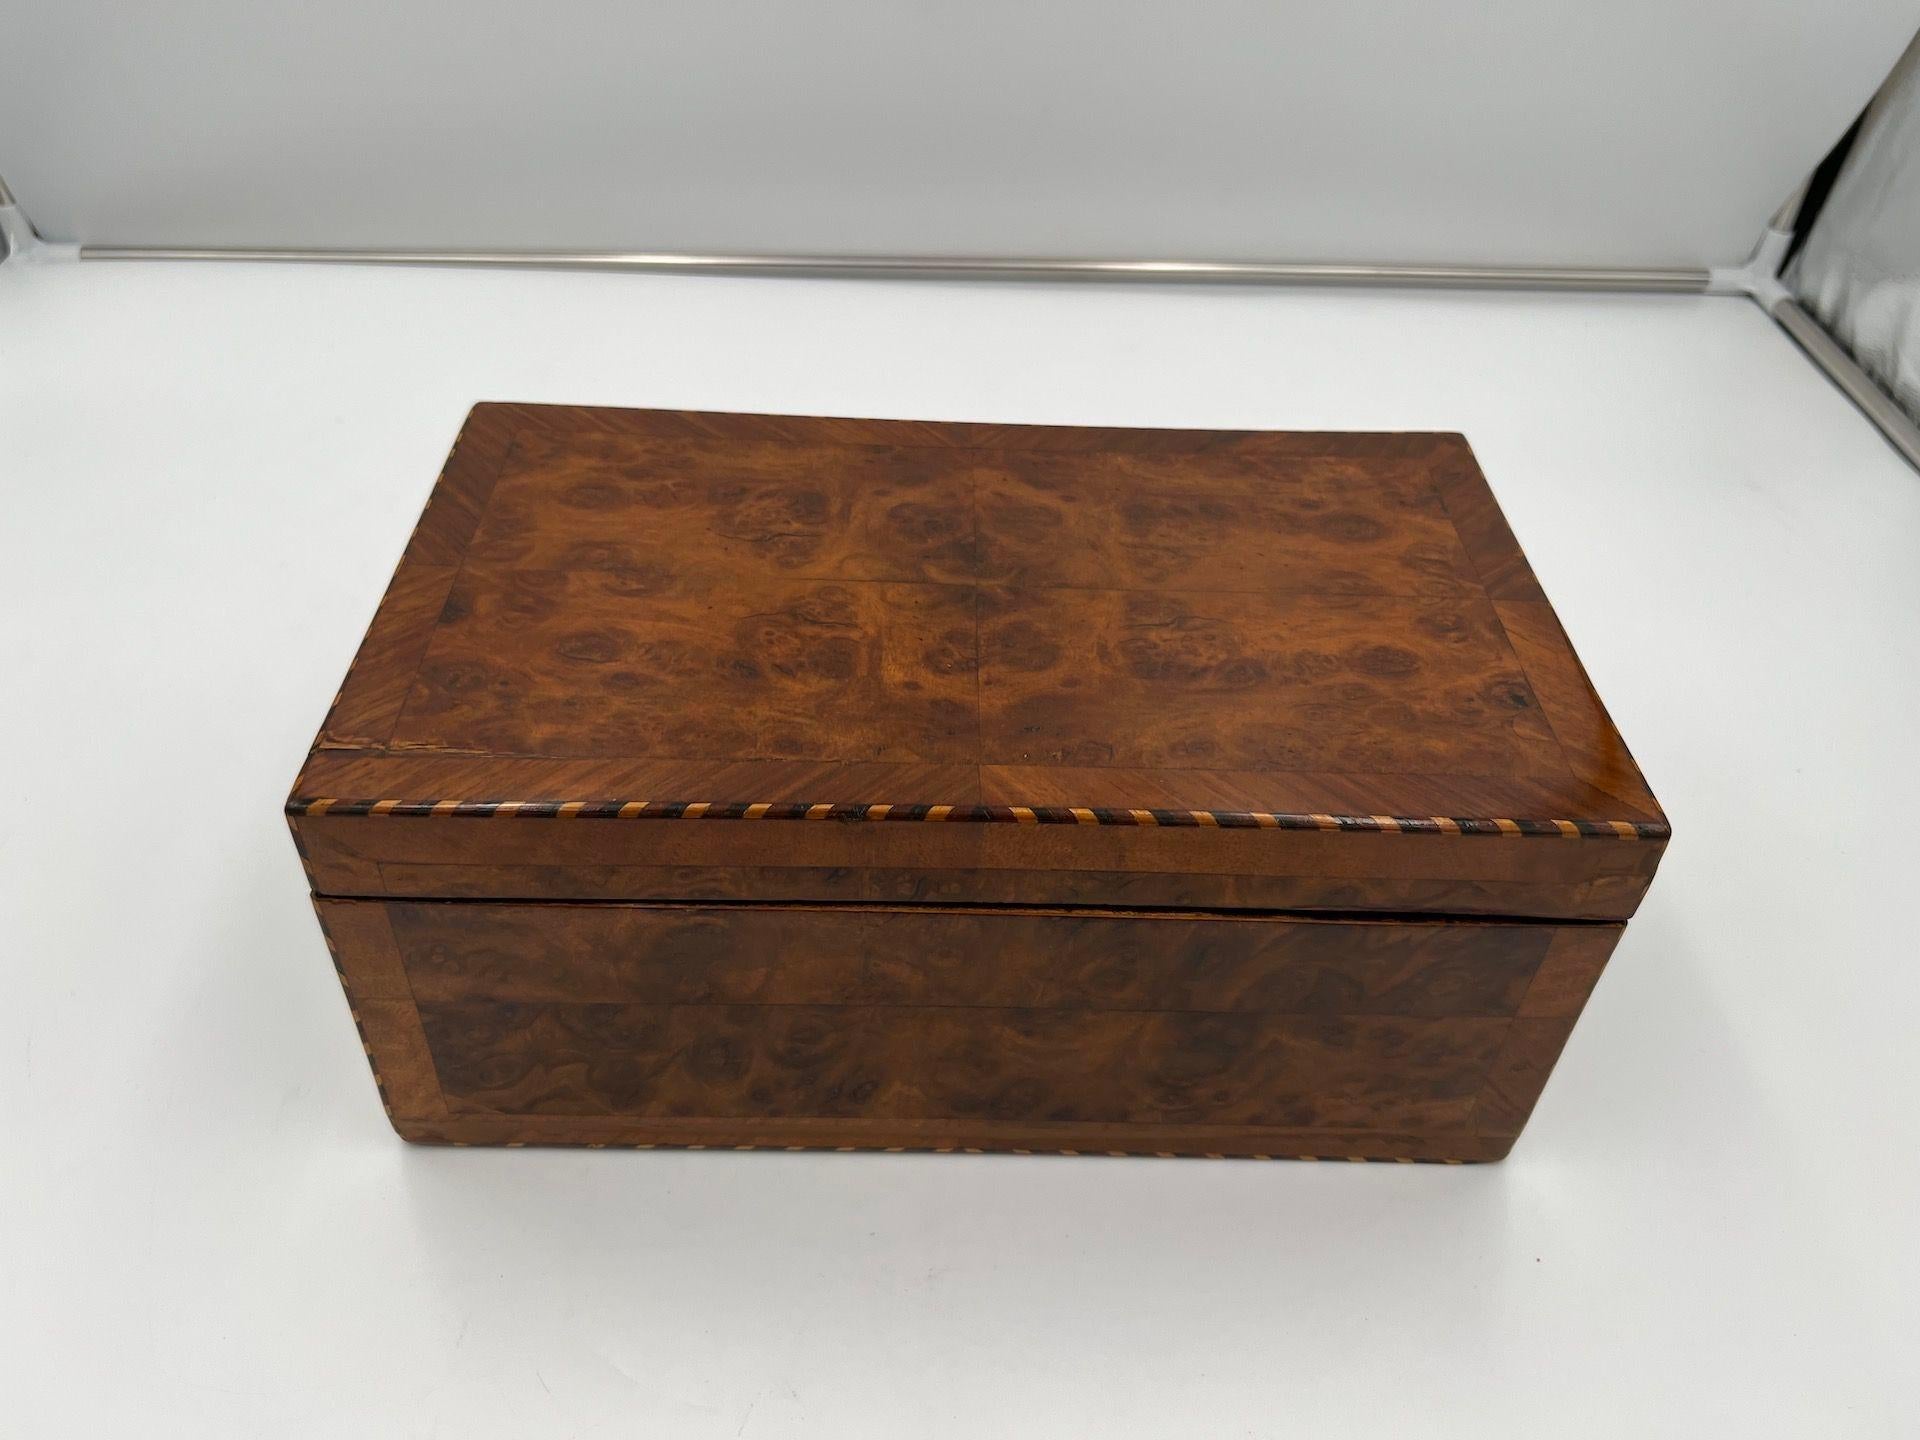 Biedermeier Box, Walnut Veneer, South Germany, circa 1860.
Walnut and walnut root veneer. Inlay trims in maple and ebony.
Refinished condition, hand polished with shellac.
Dimensions: H 14 cm x W 32,8 cm x D 19 cm